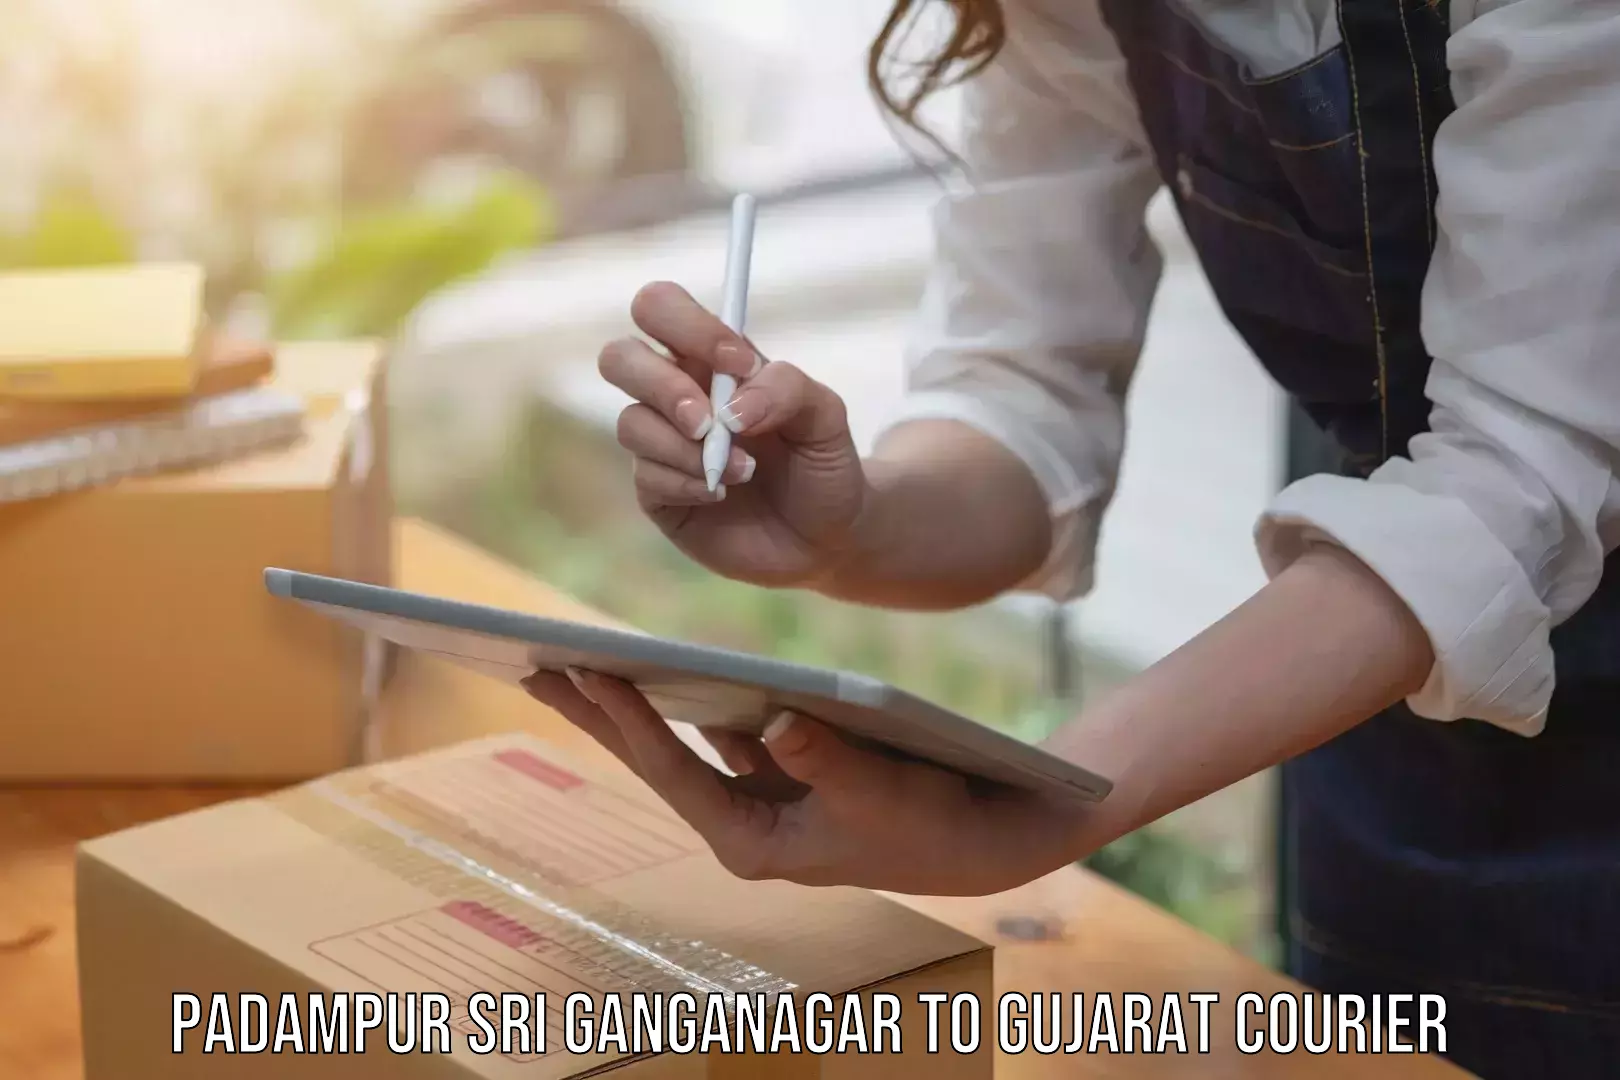 Nationwide courier service Padampur Sri Ganganagar to Banaskantha